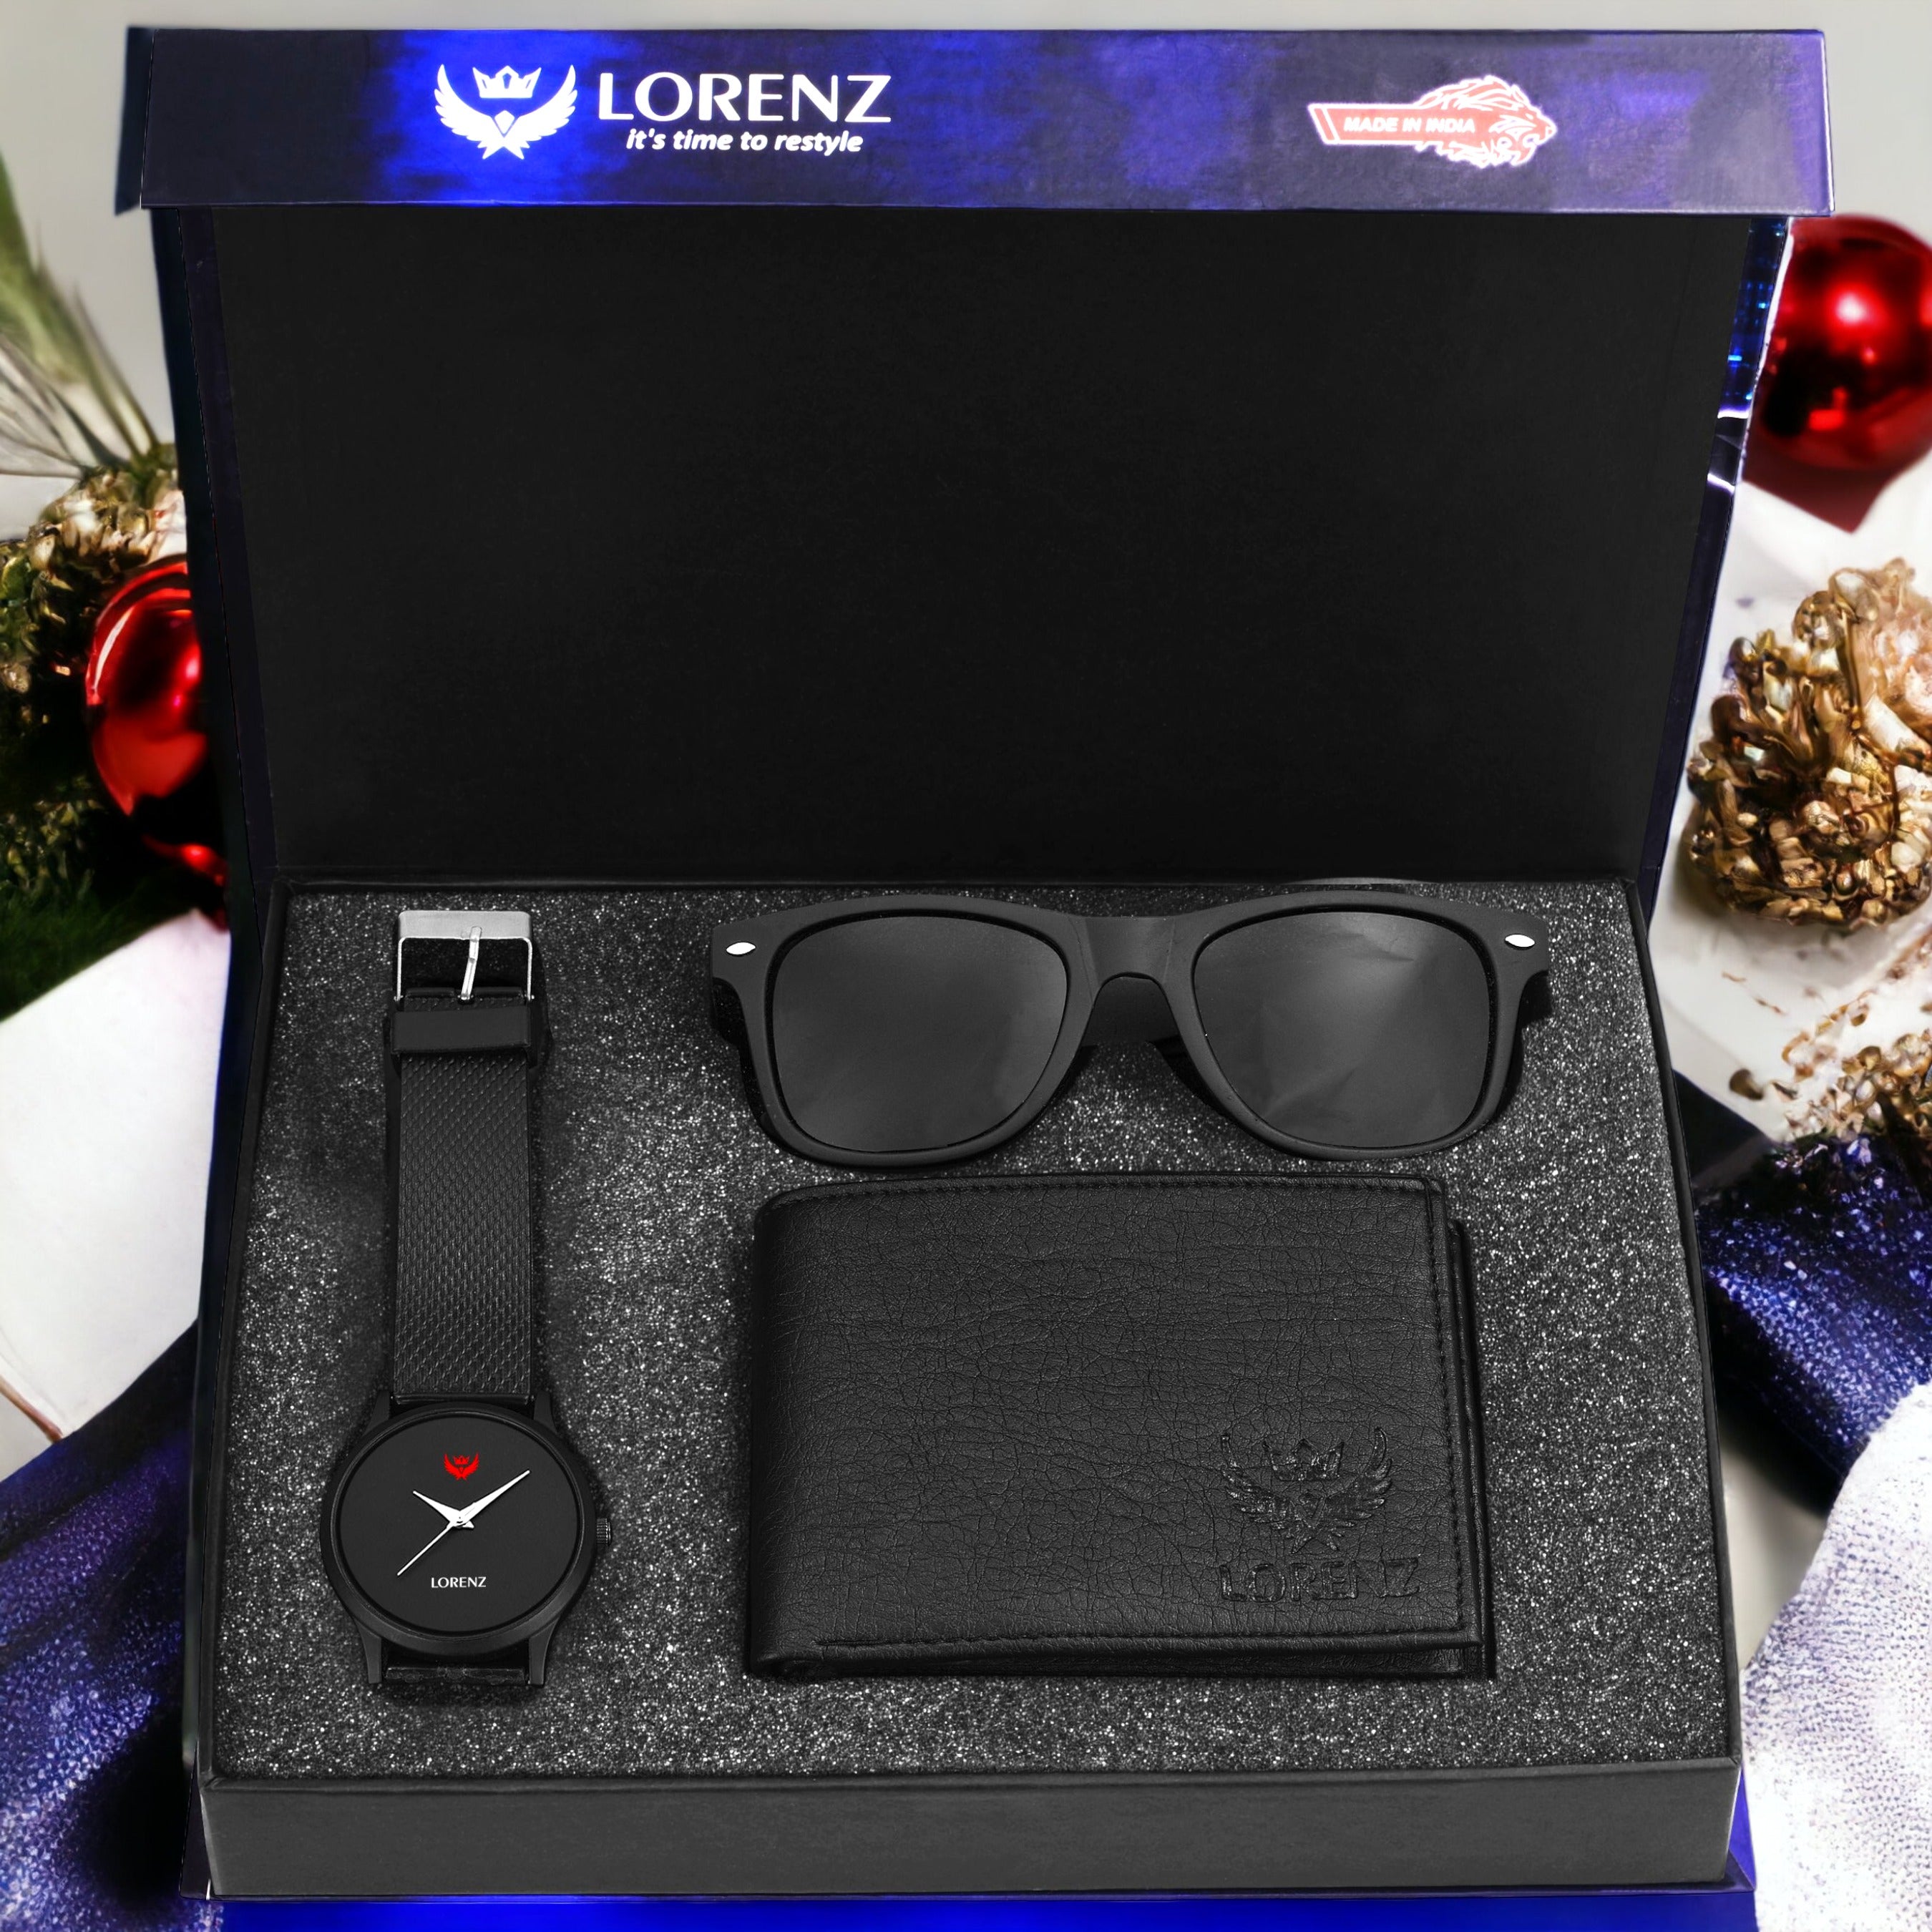  Lorenz Black Men's Watch, Black Wallet & Black Sunglasses Gift Set for Men 